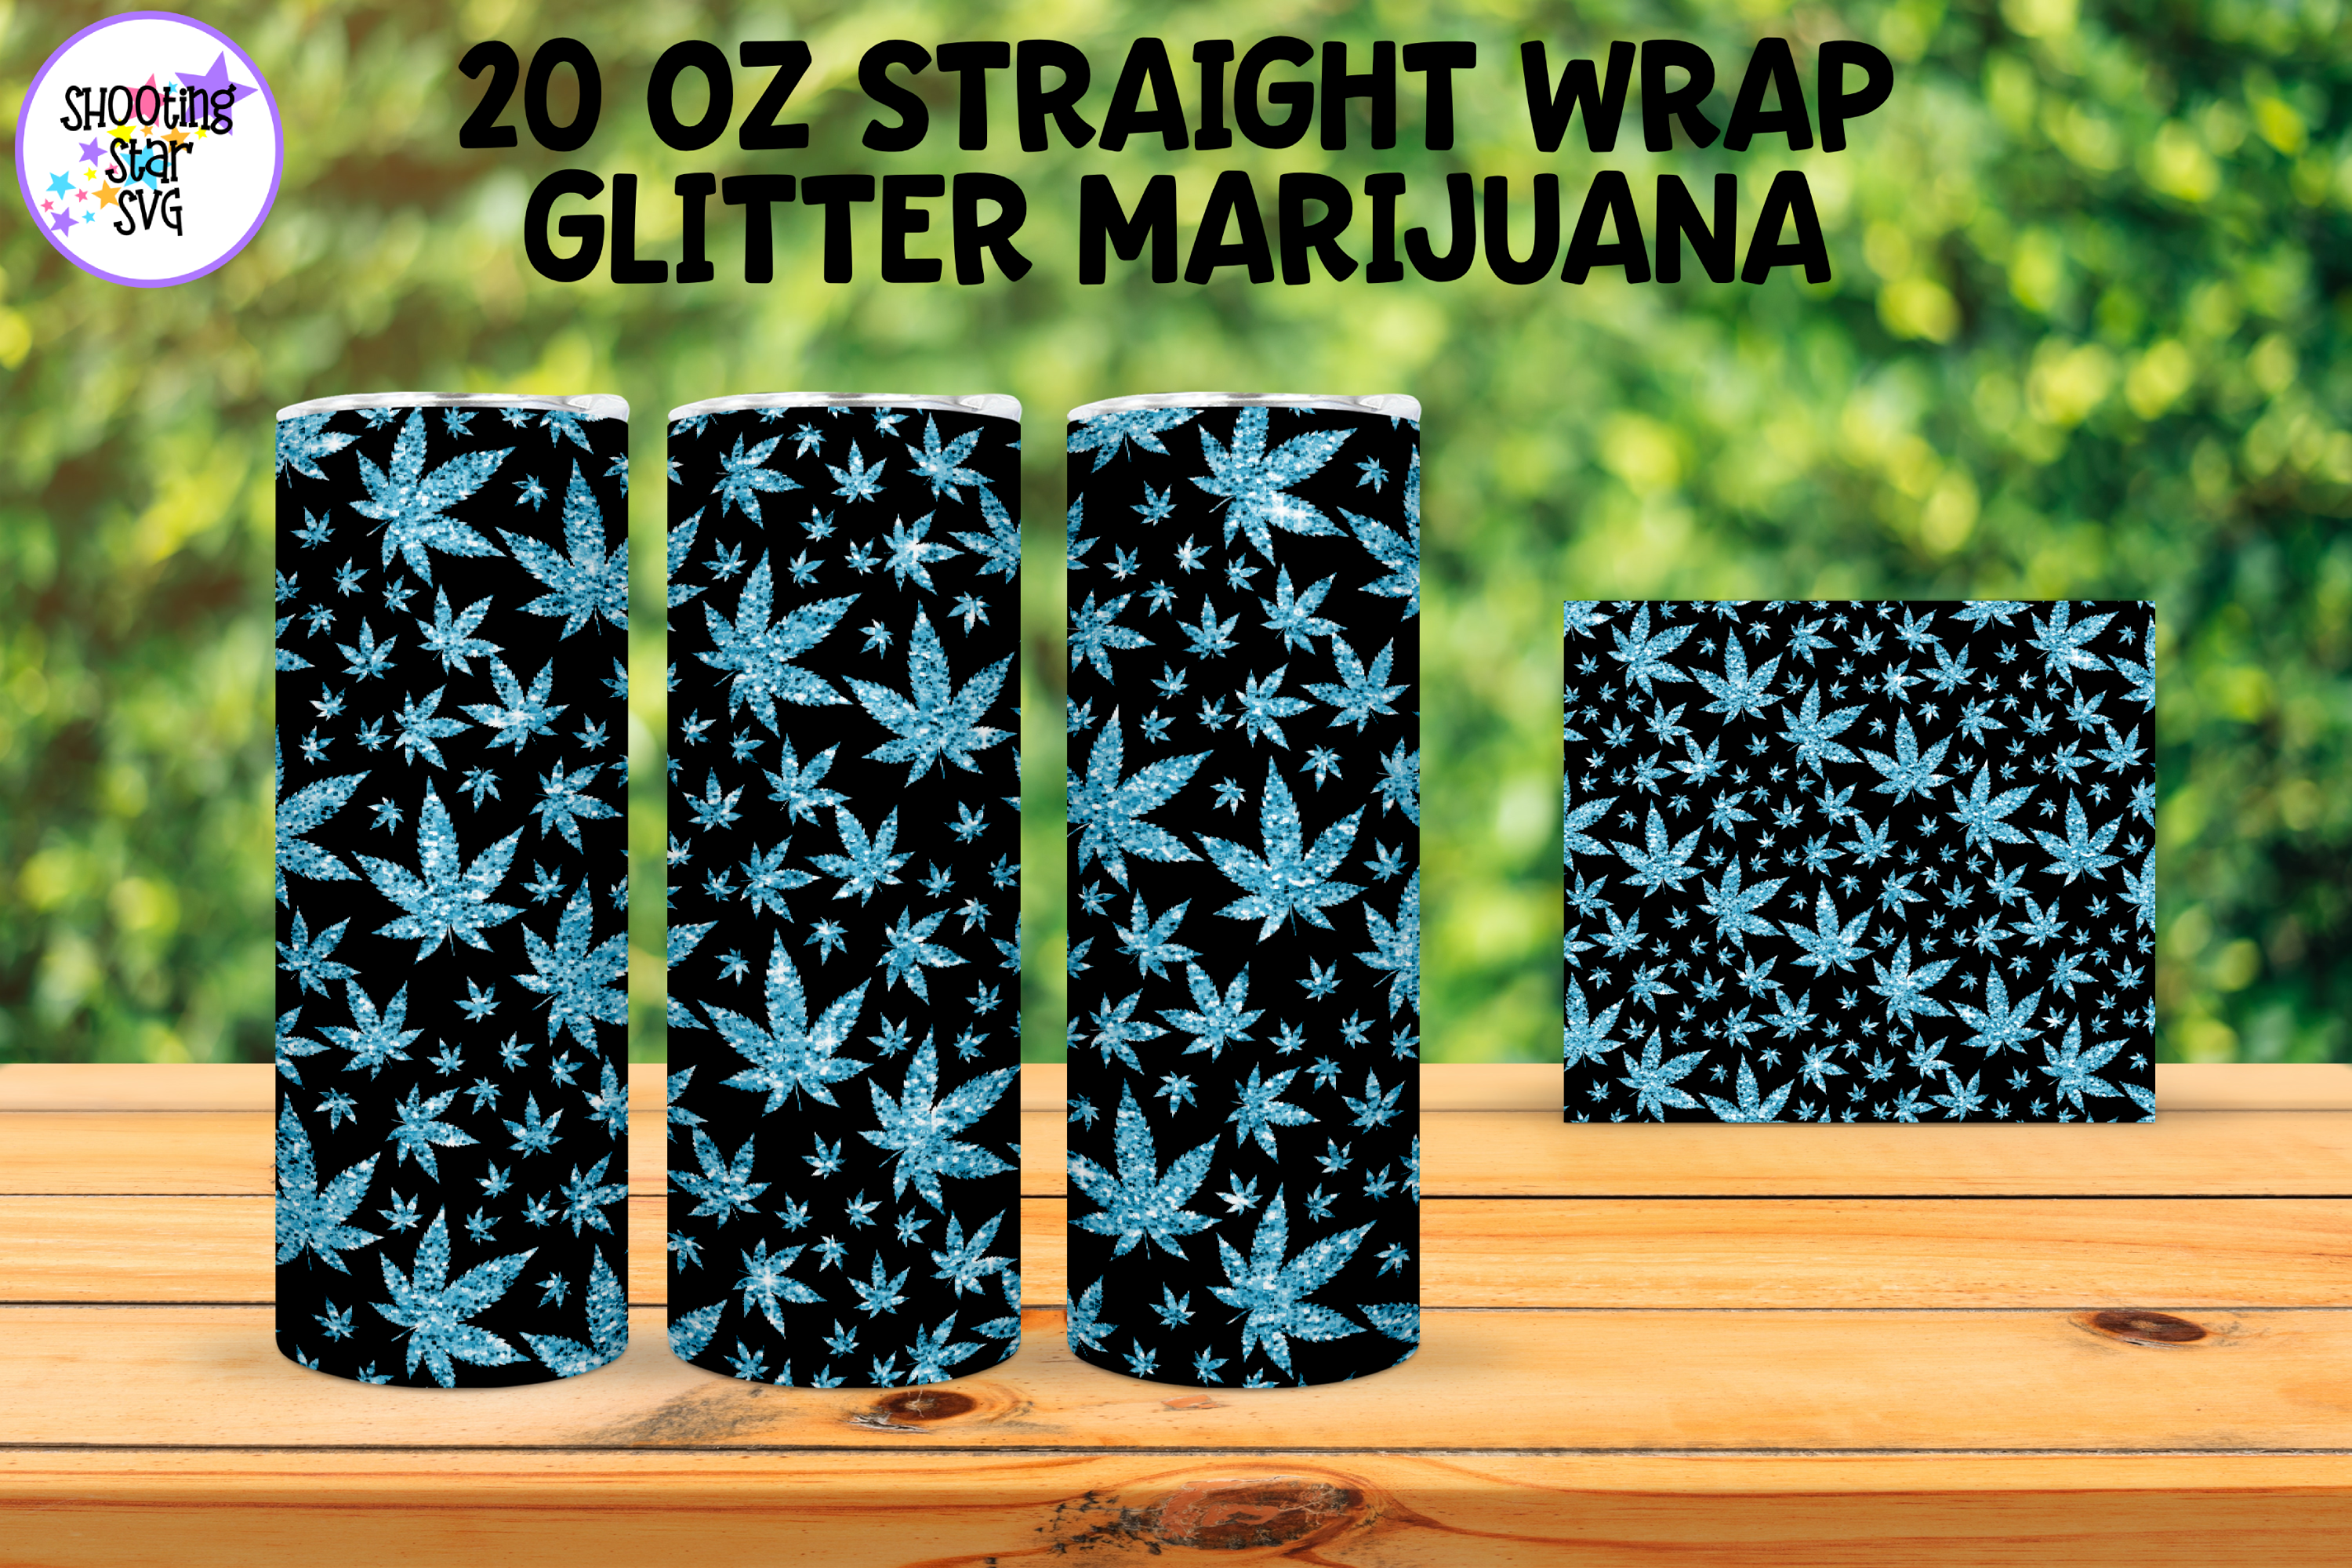 20 OZ Straight Tumbler Marijuana Glitter Leaves